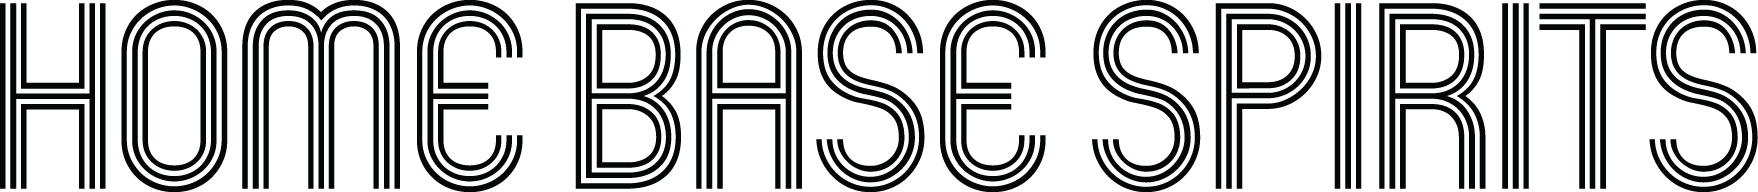 Home Base Spirits horizontal logo 